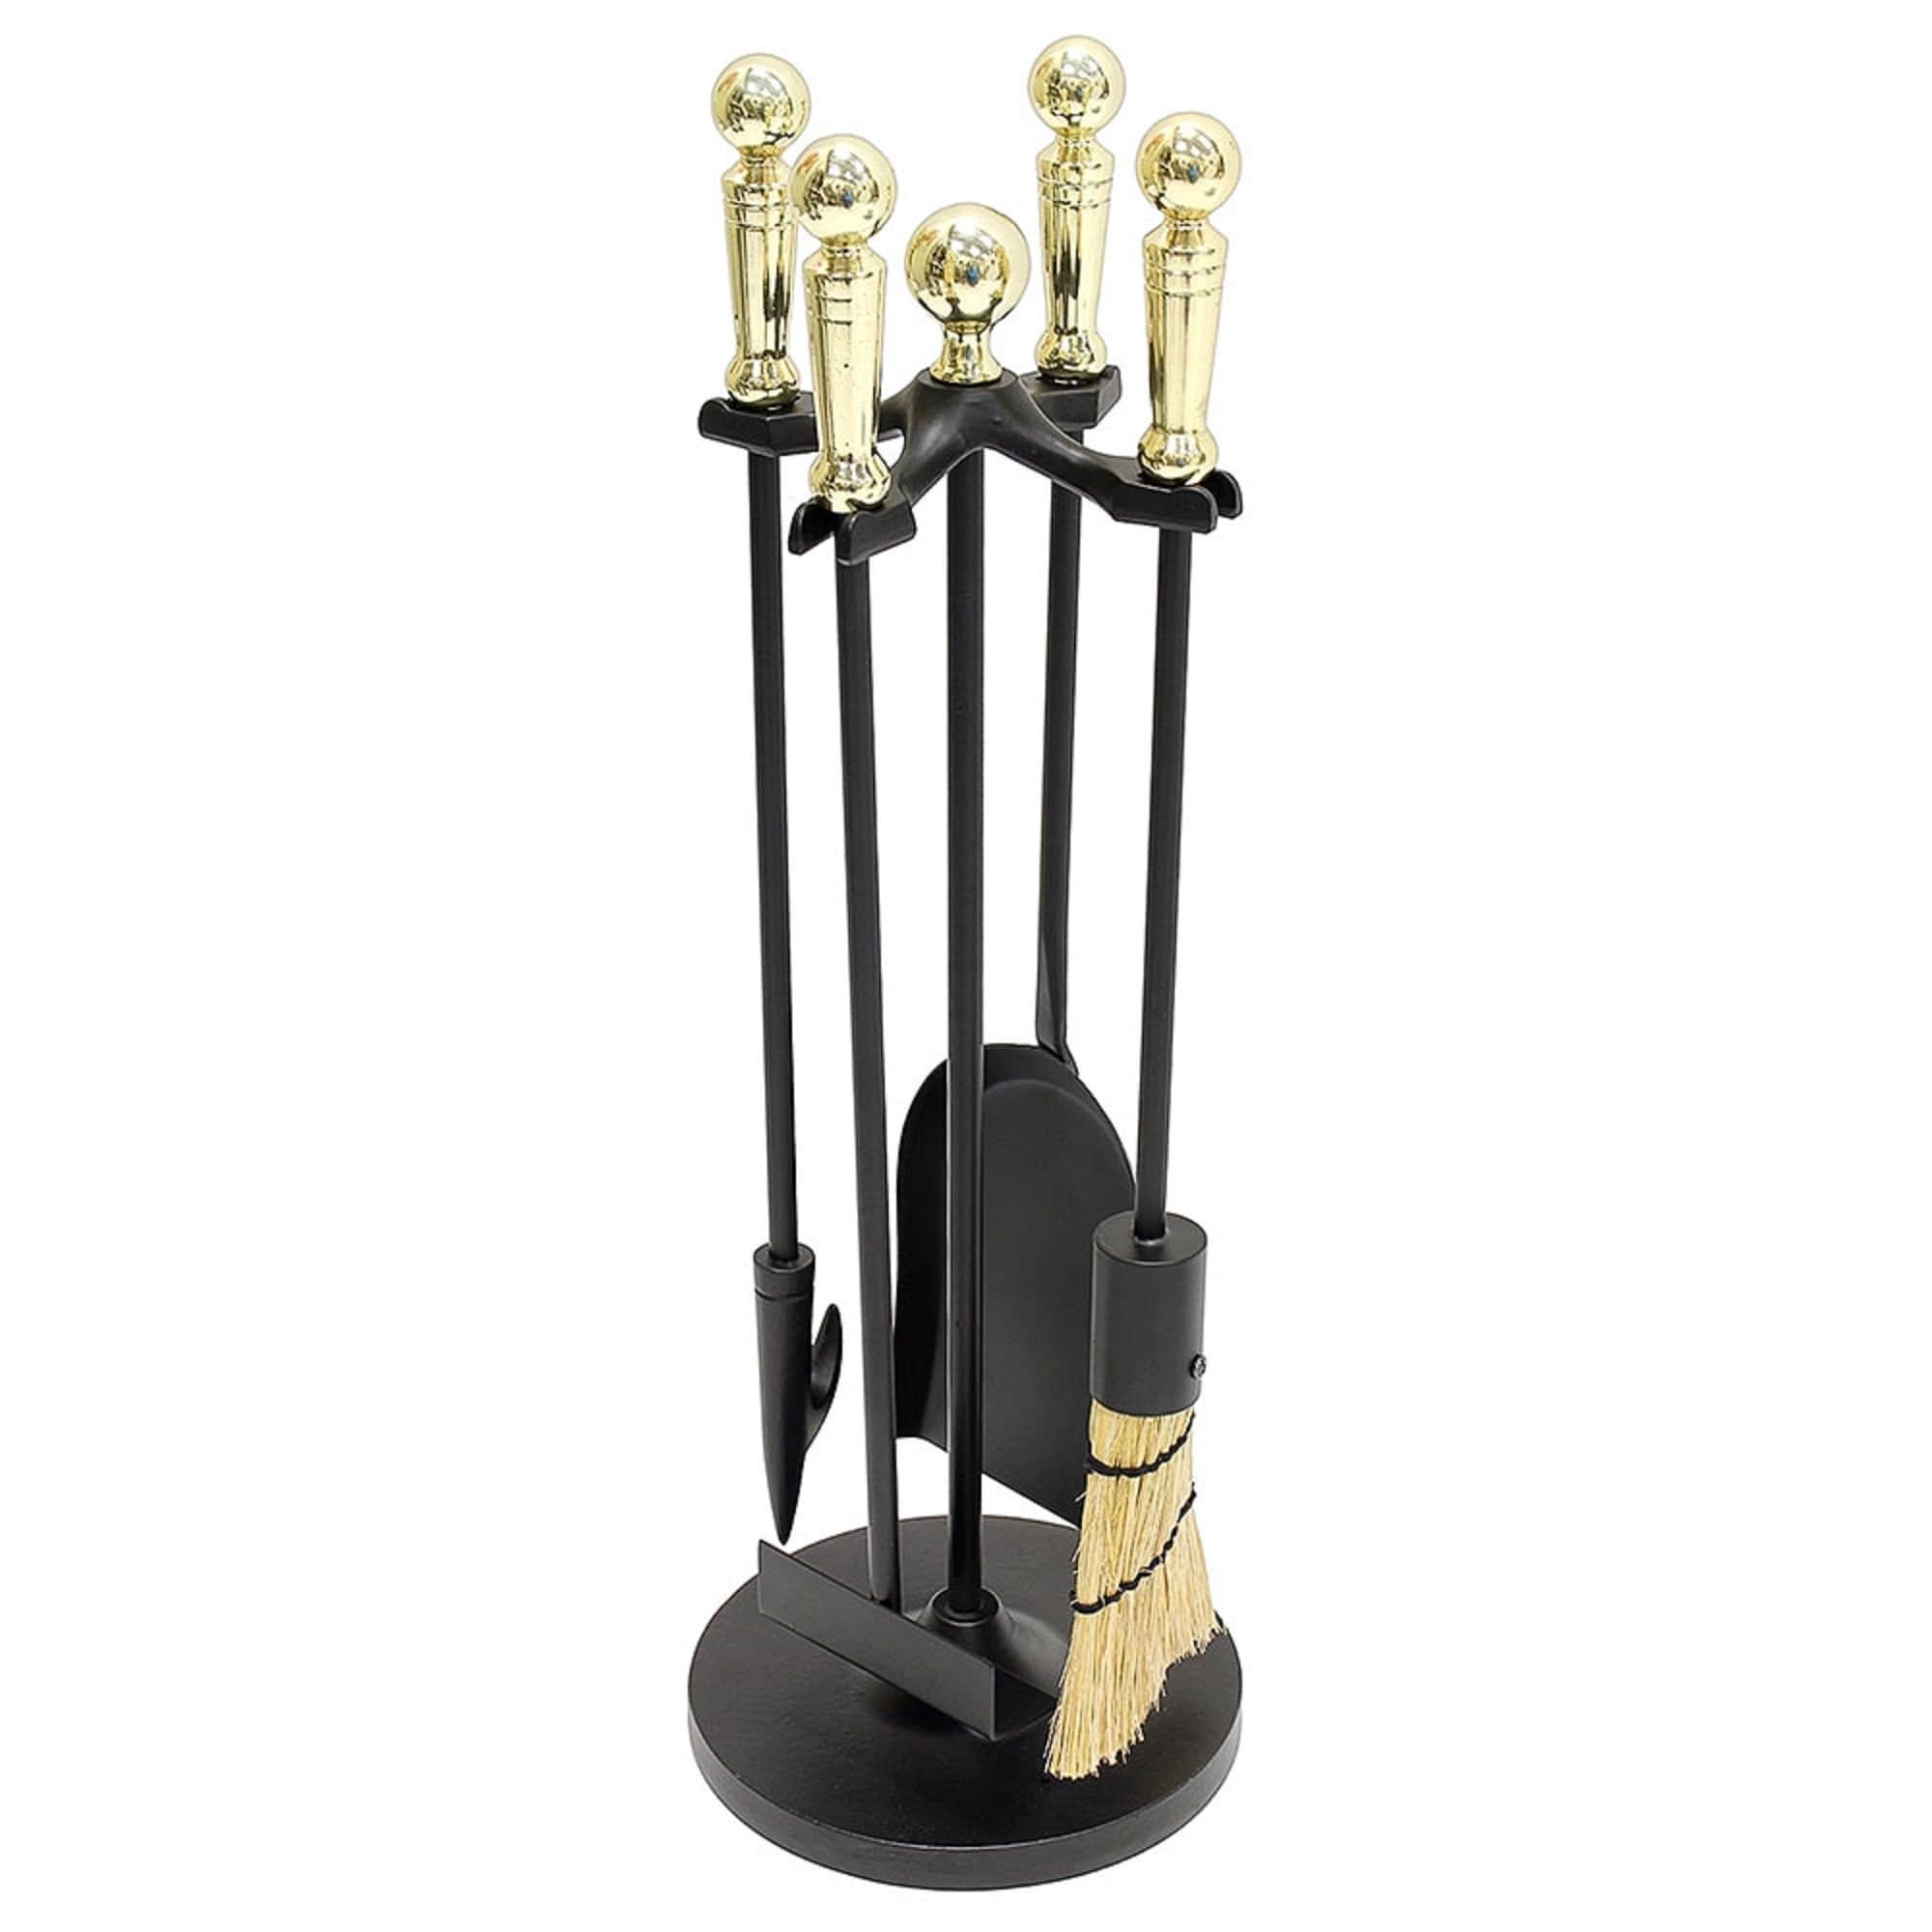 Minuteman International Paxton Set of 5 Mini Fireplace Tools, 22 Inch Tall, Polished Brass